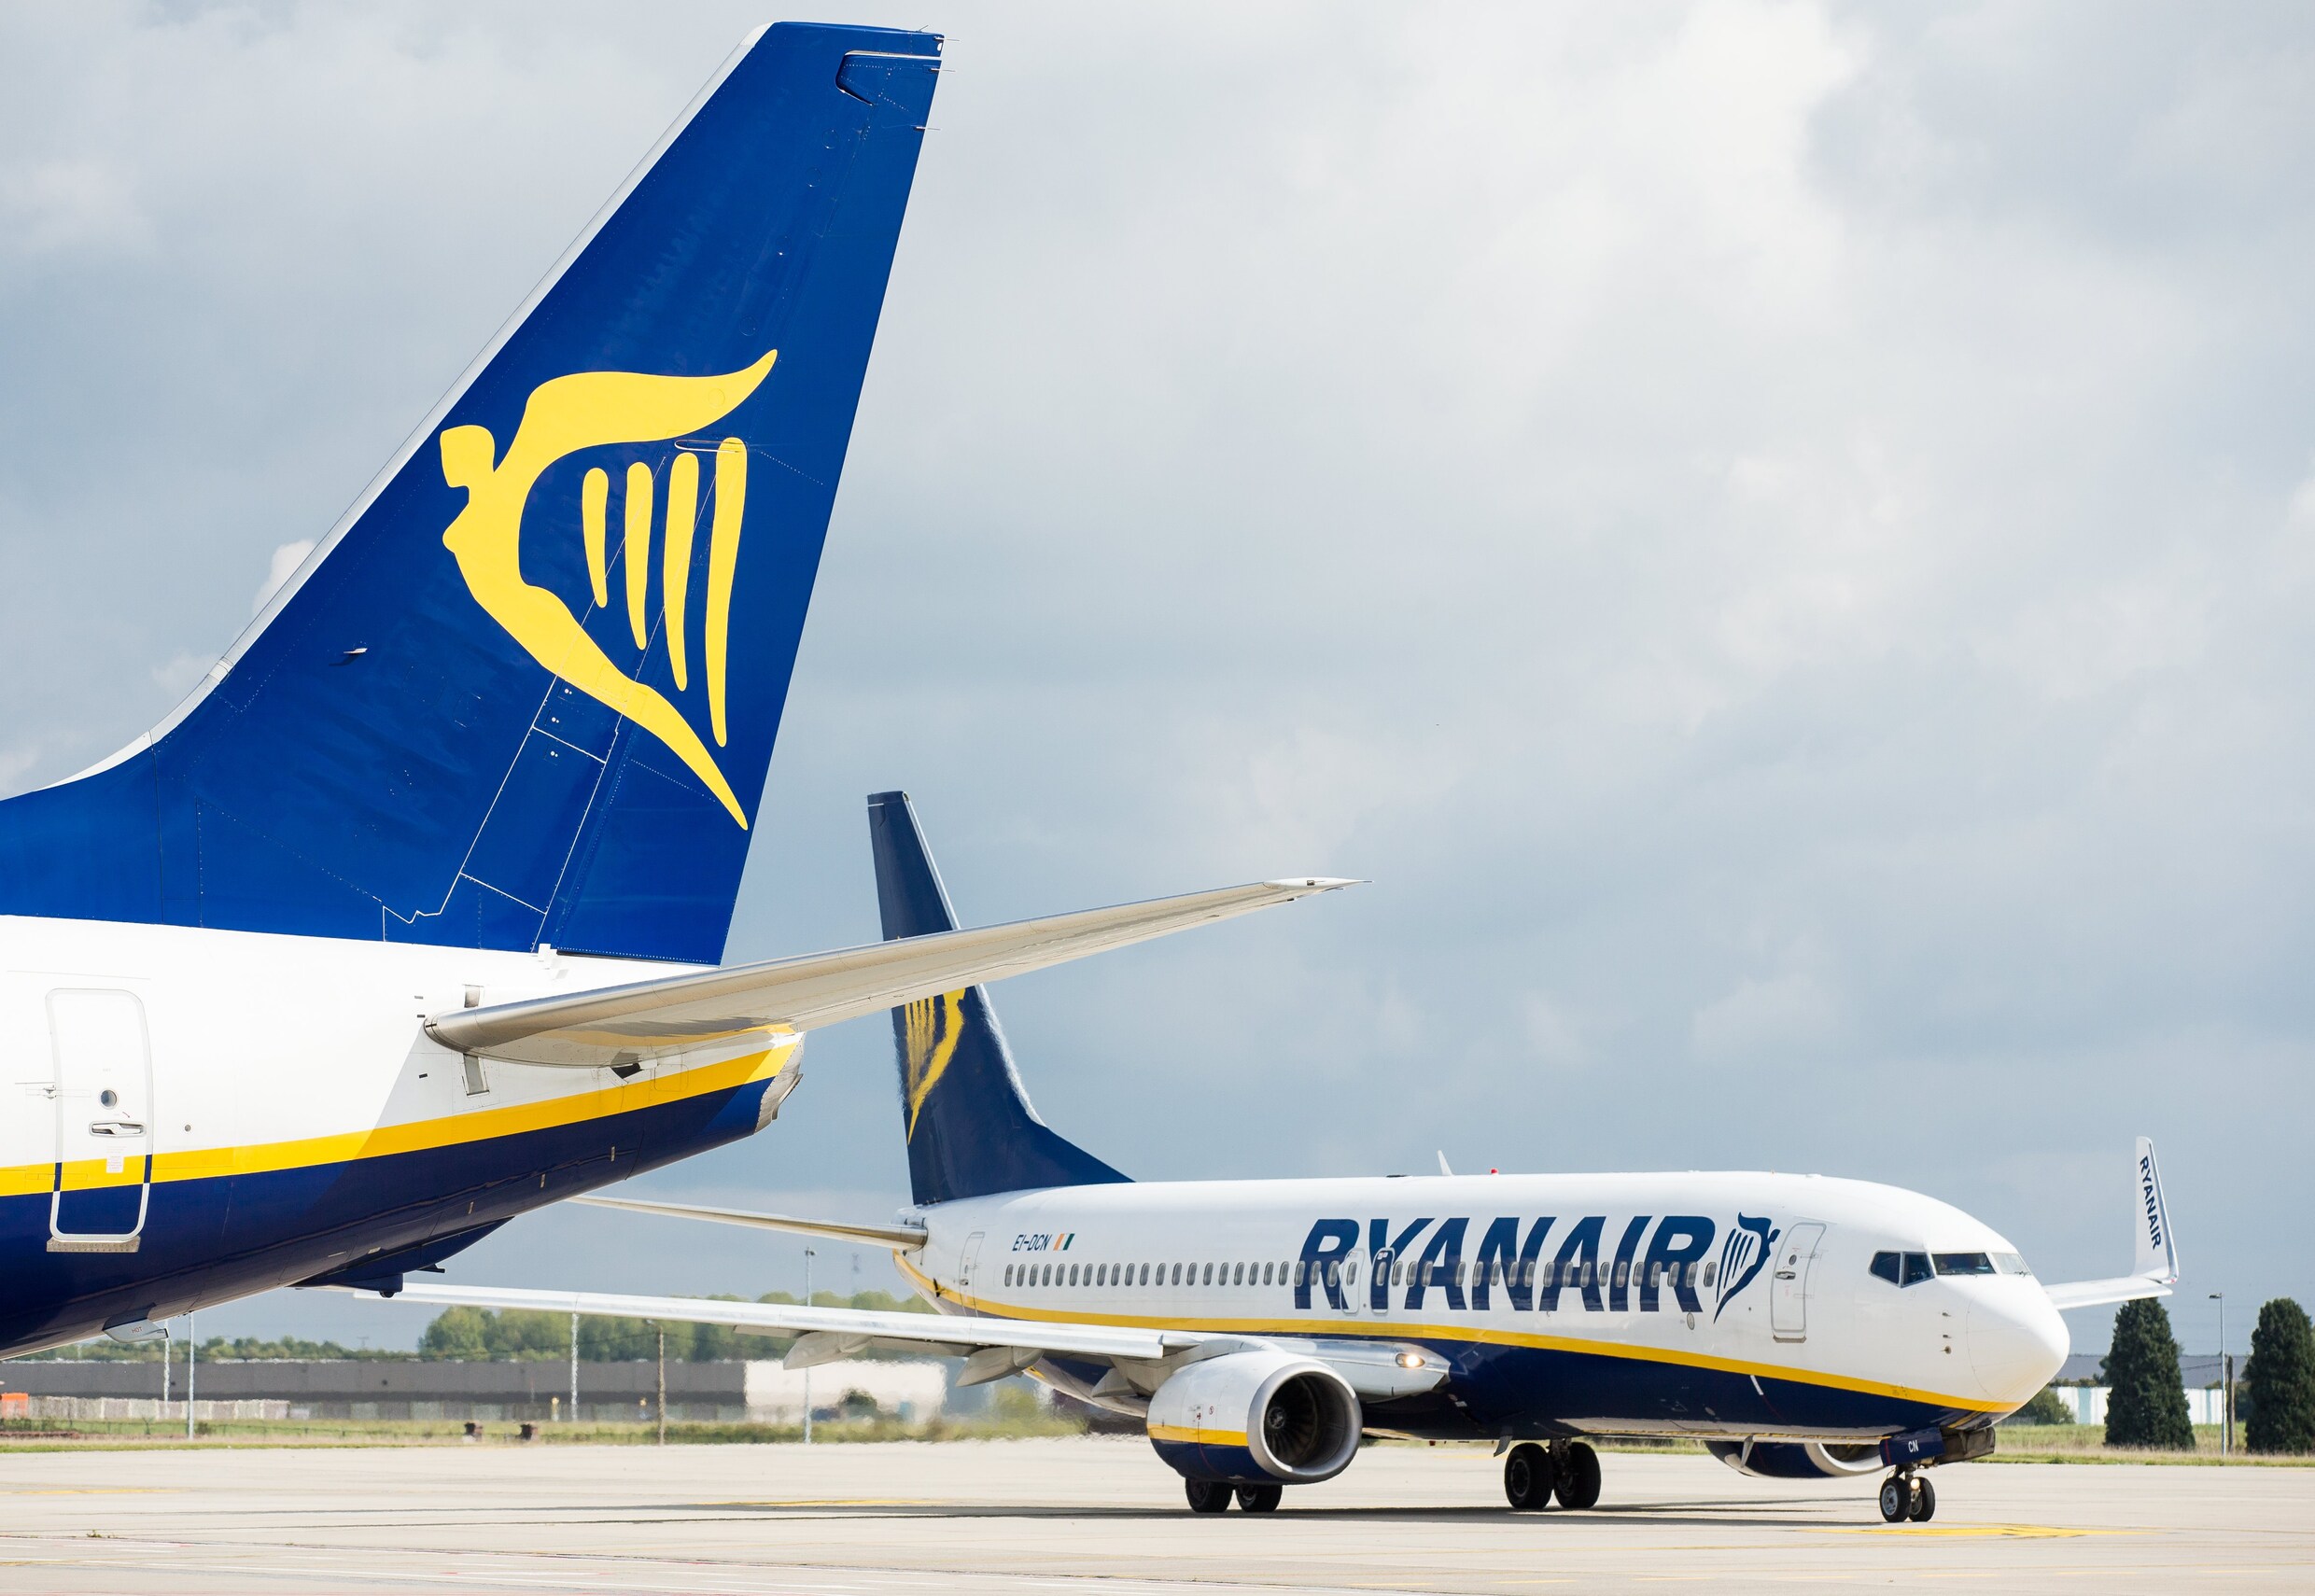 Vakbond: "Ryanair rommelt met wetgeving om staking te breken"